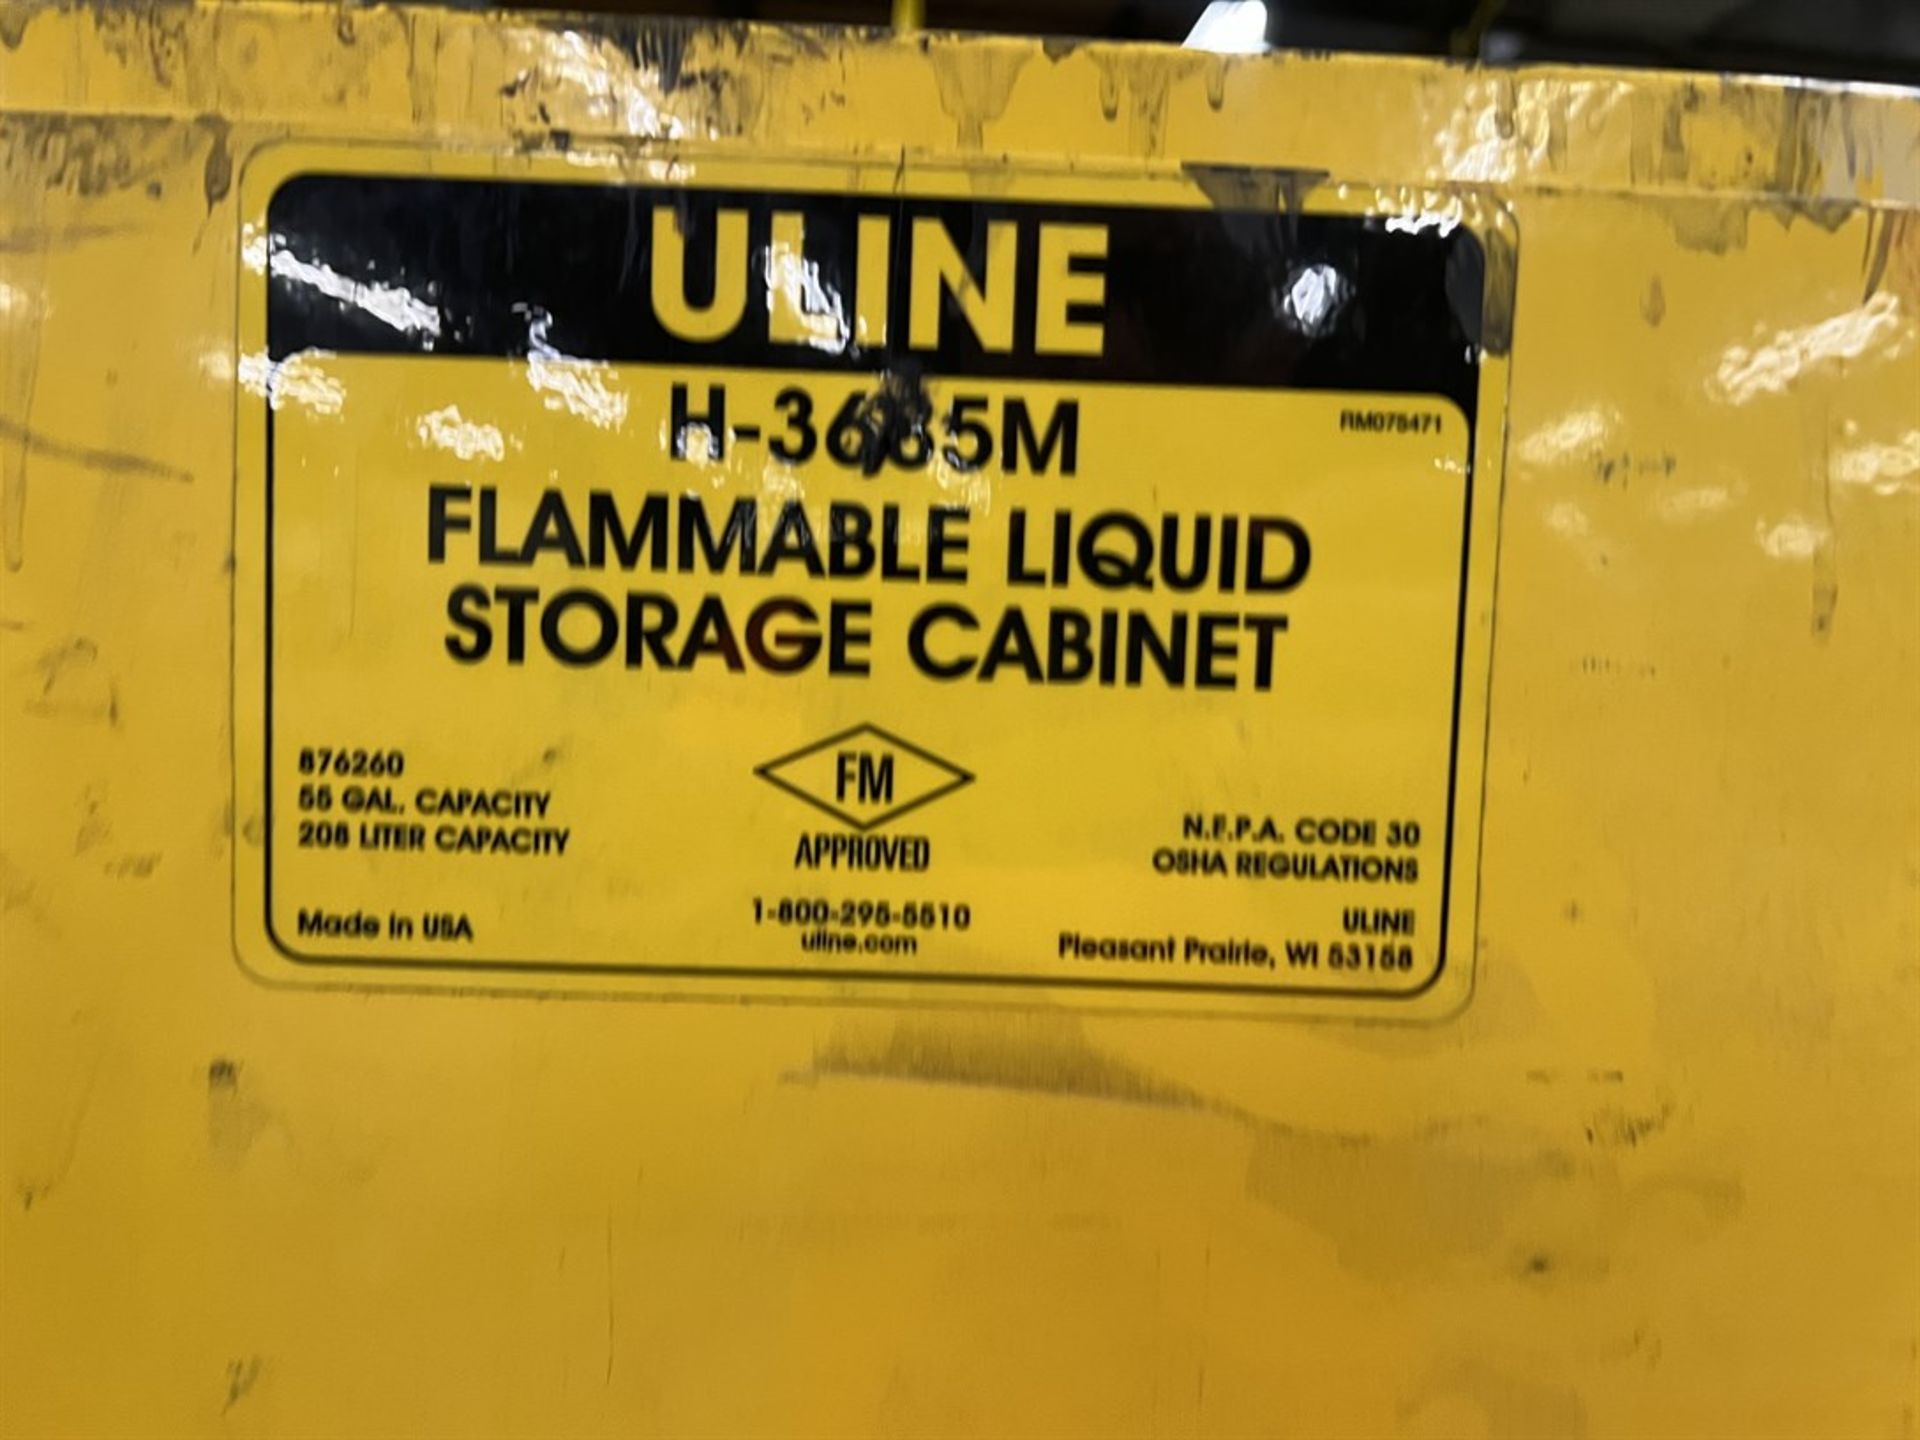 ULINE H-3685M Flammable Liquids Storage Cabinet,55 Gallon (Located in Waukegan, IL) - Image 2 of 2